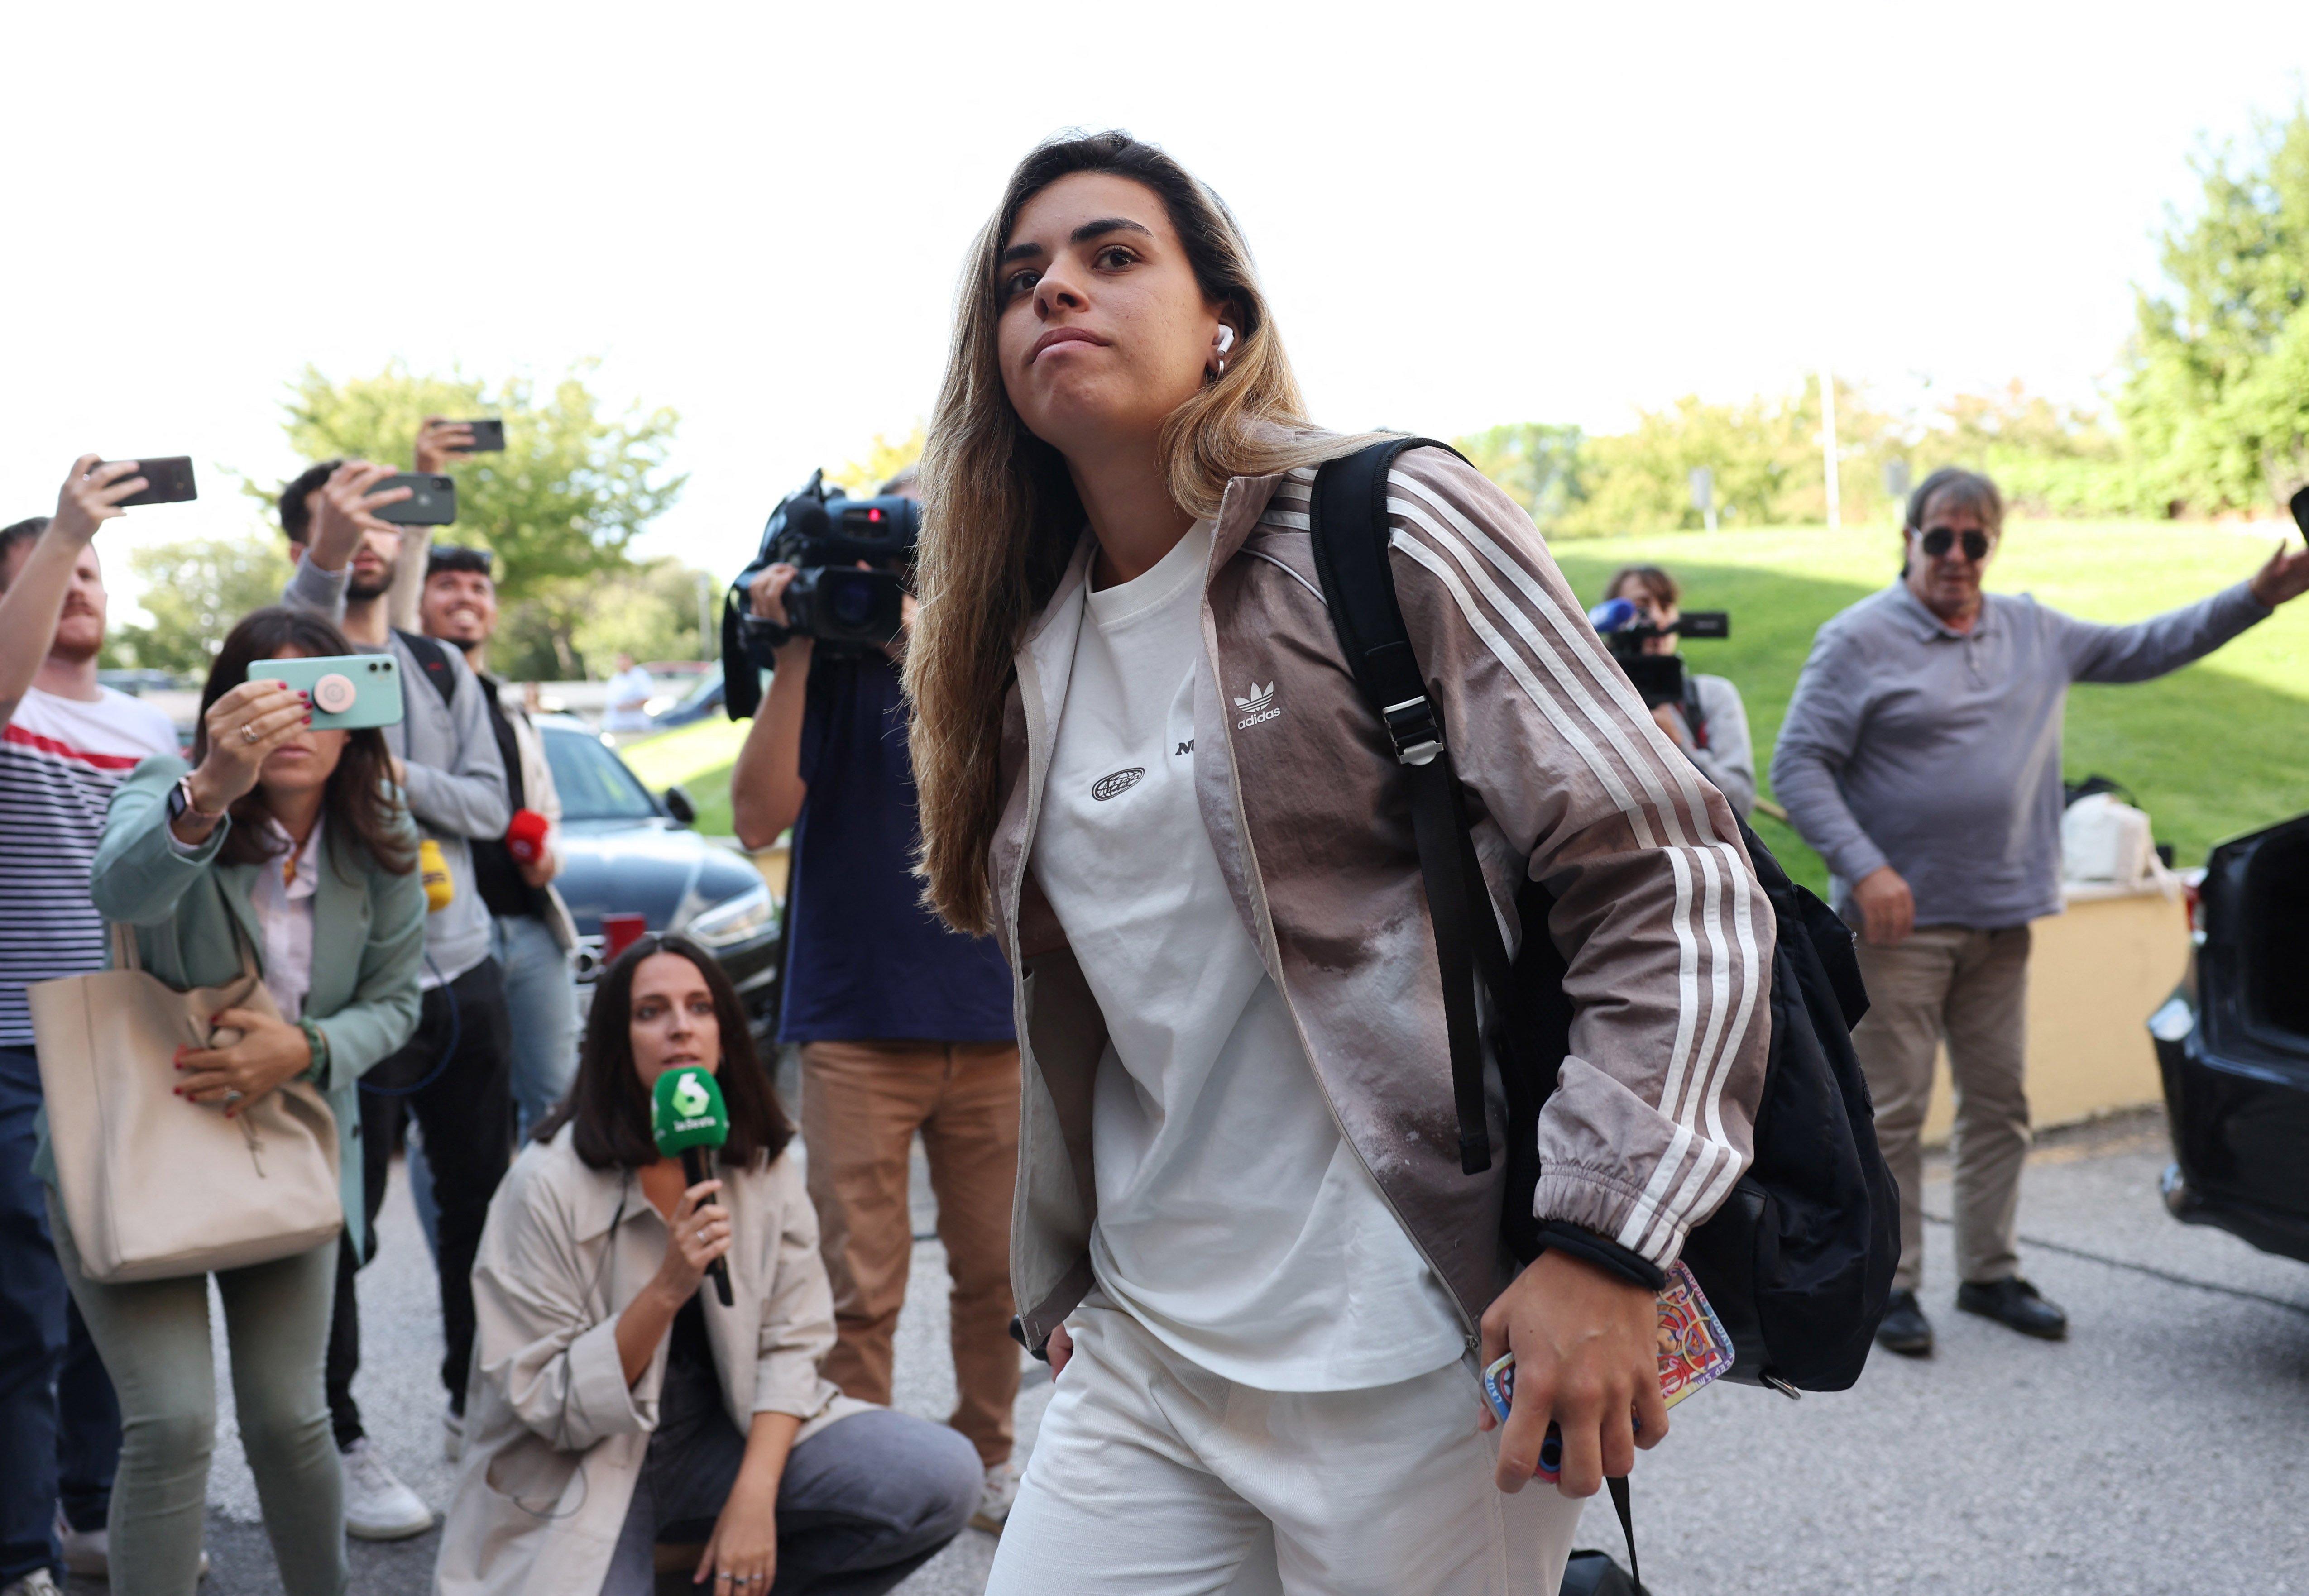 Spain women's soccer team arrive at their hotel